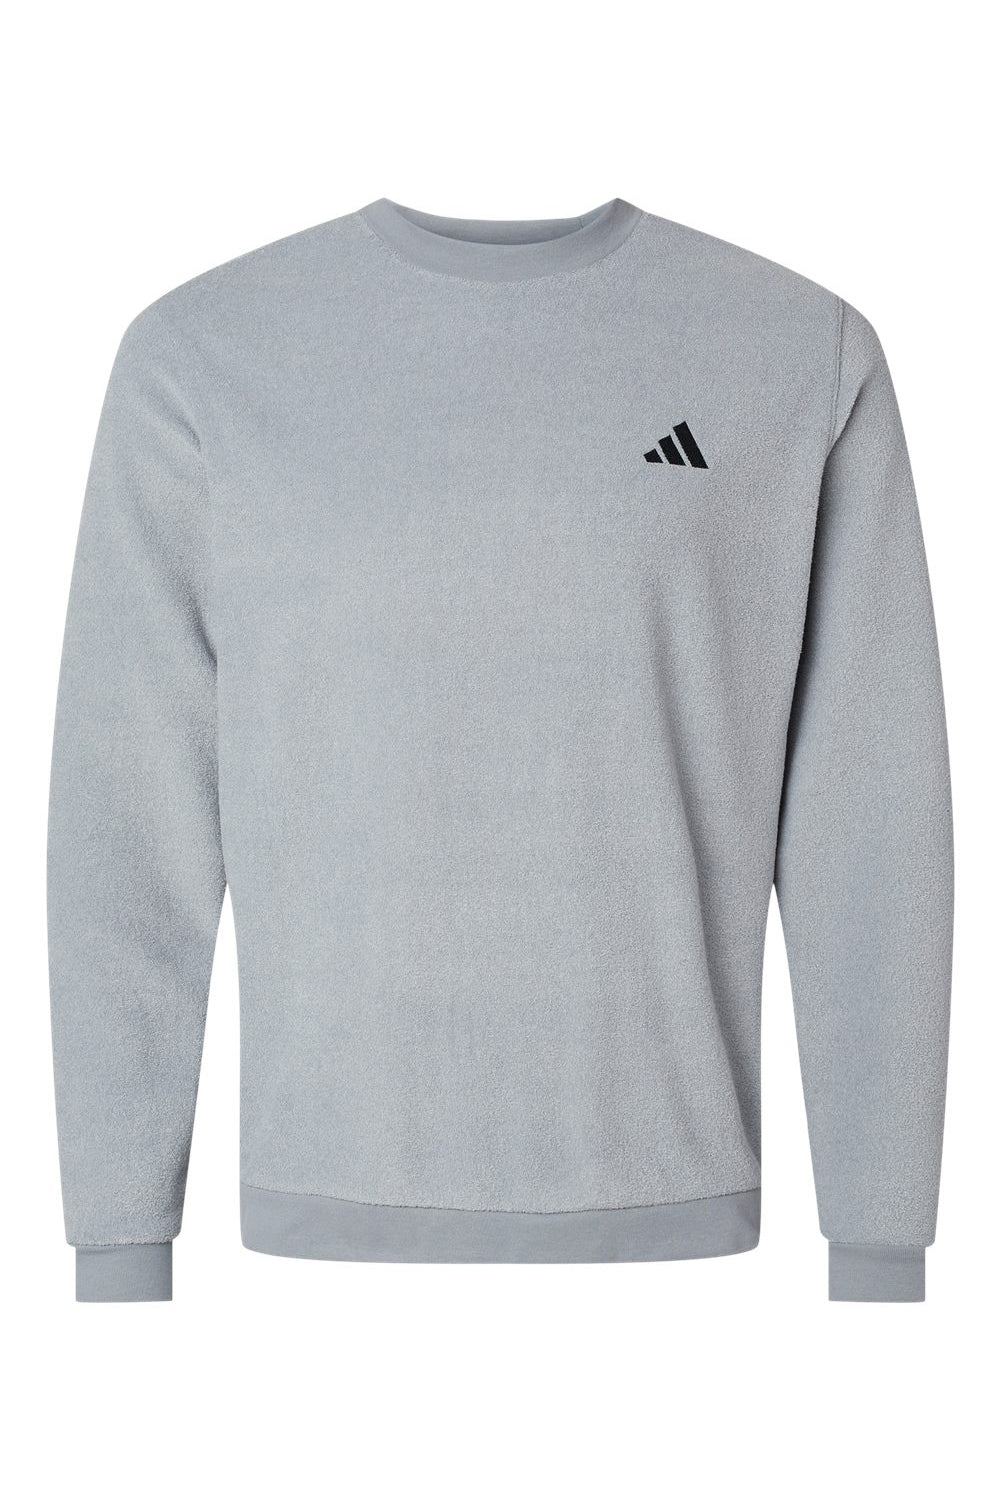 Adidas A586 Mens Crewneck Sweatshirt Grey Flat Front